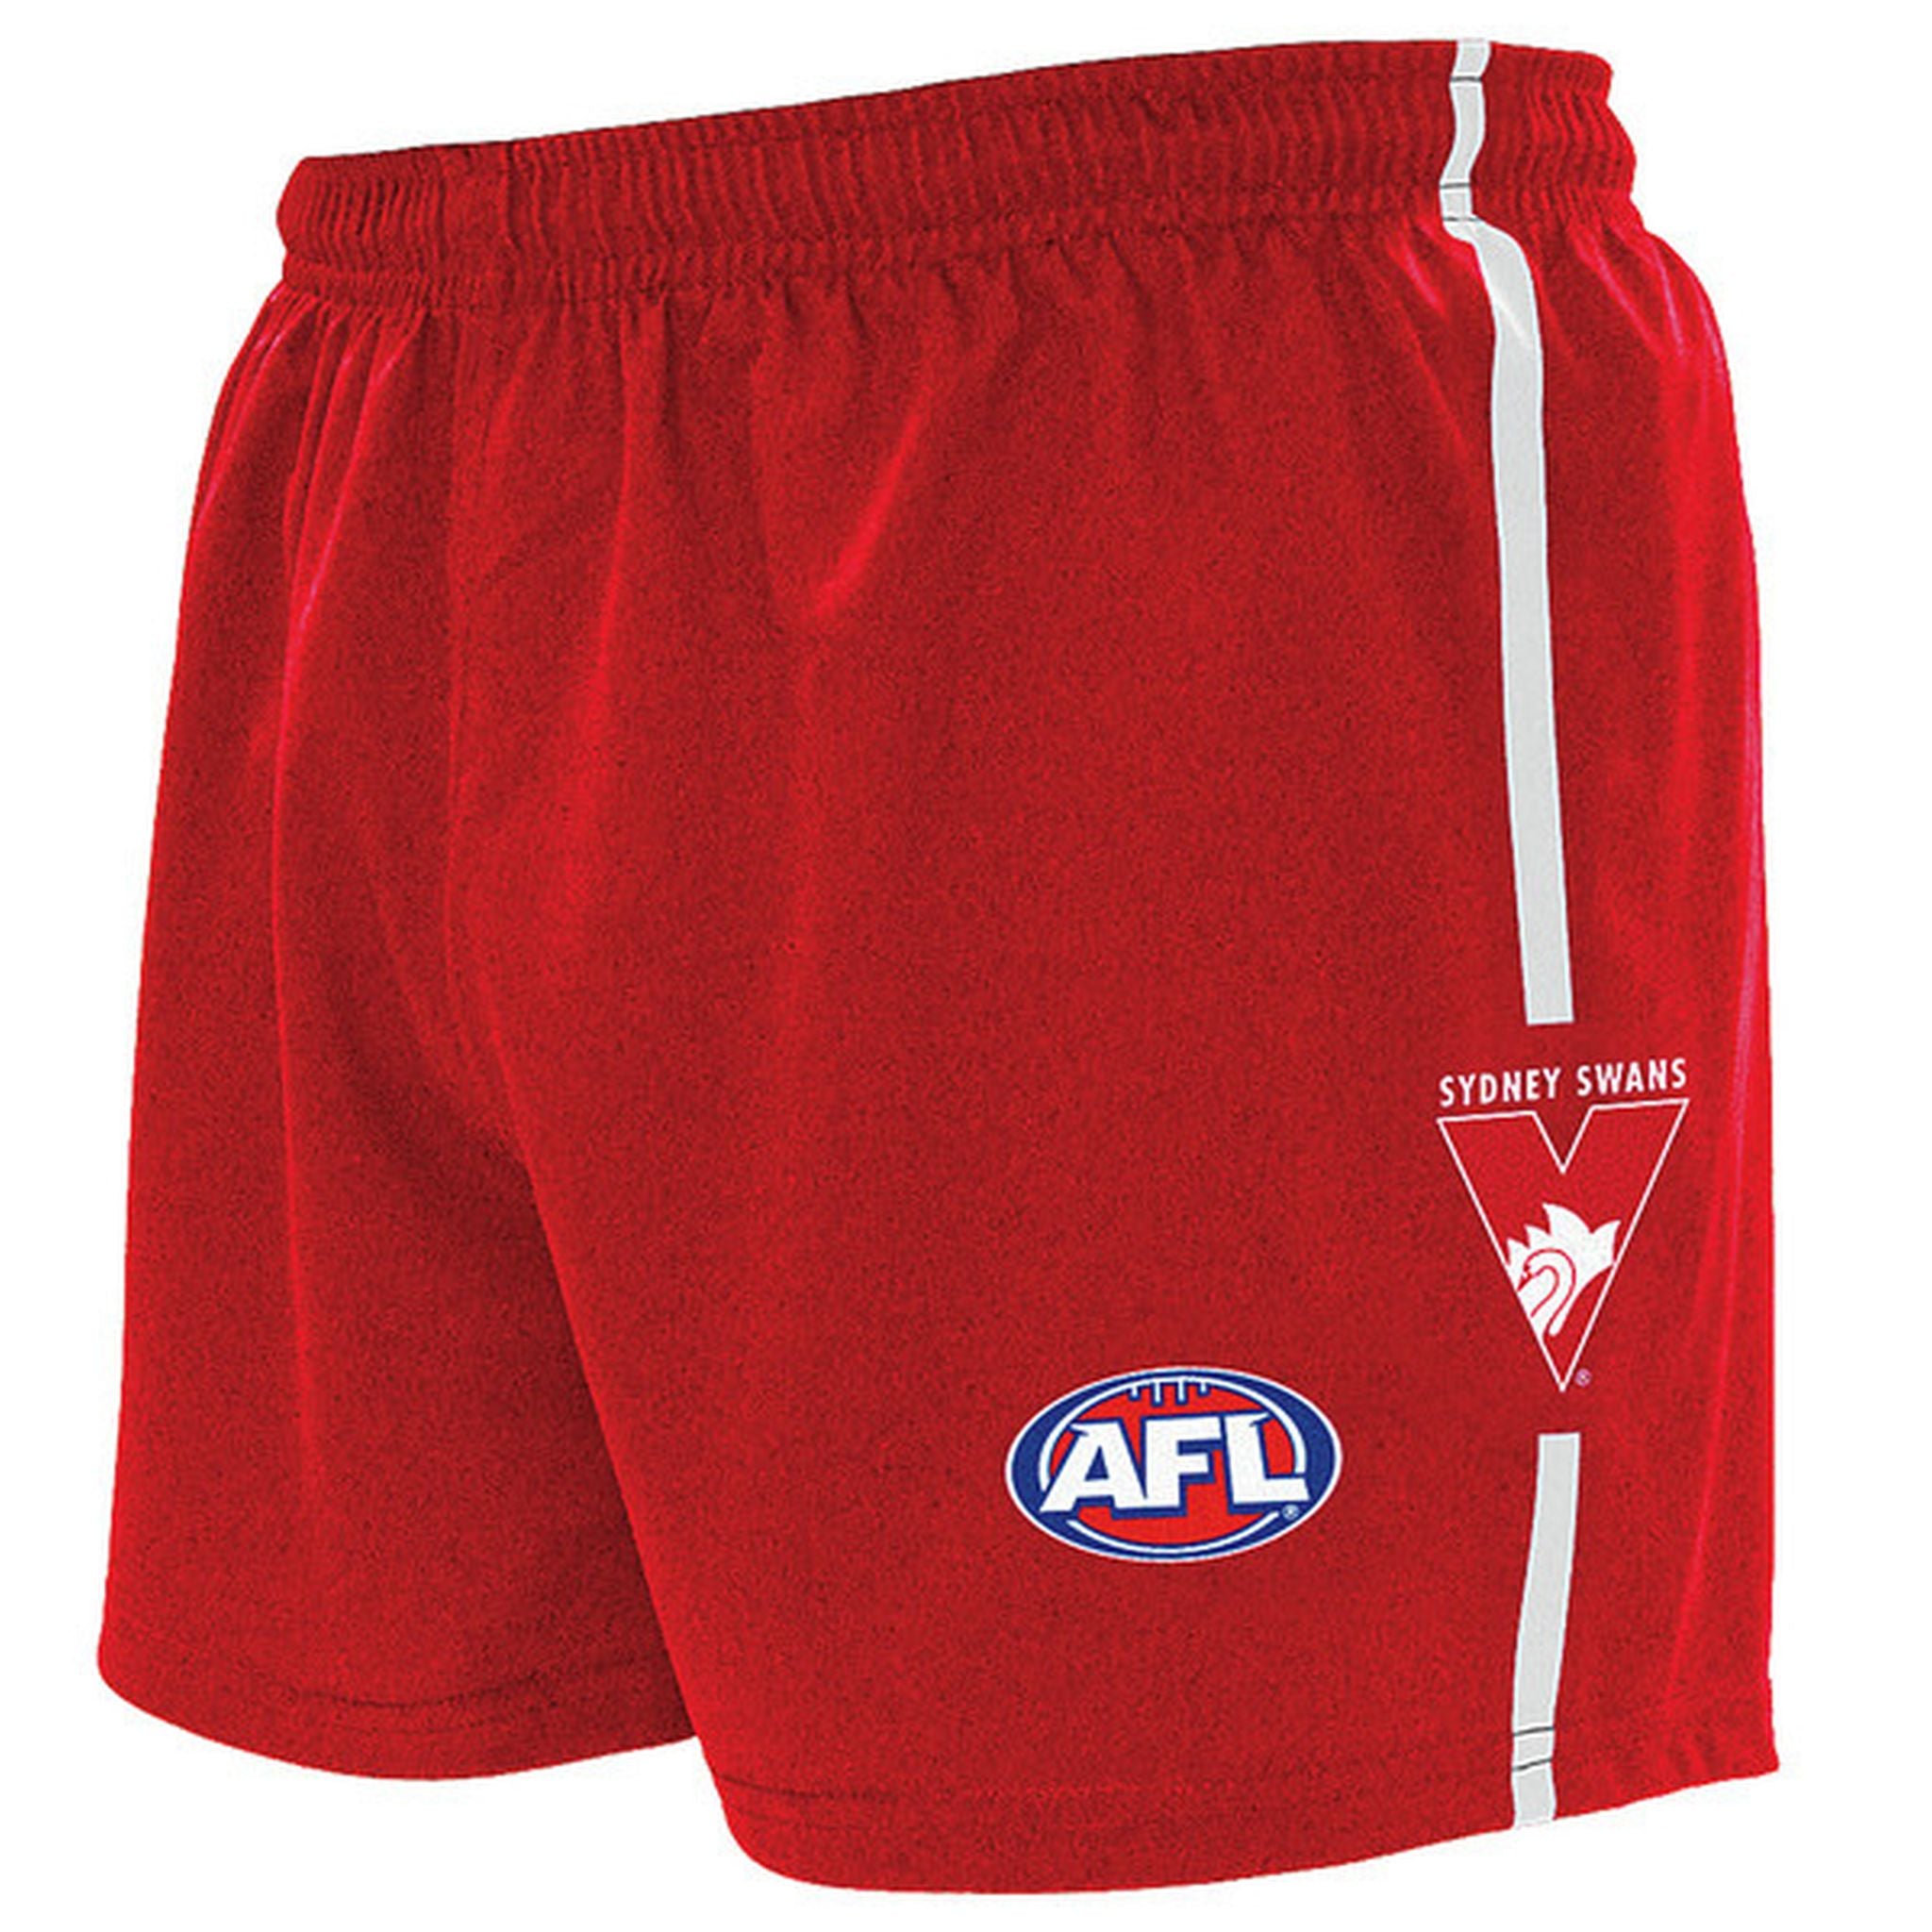 Burley Sydney Swans AFL Replica Kids Shorts